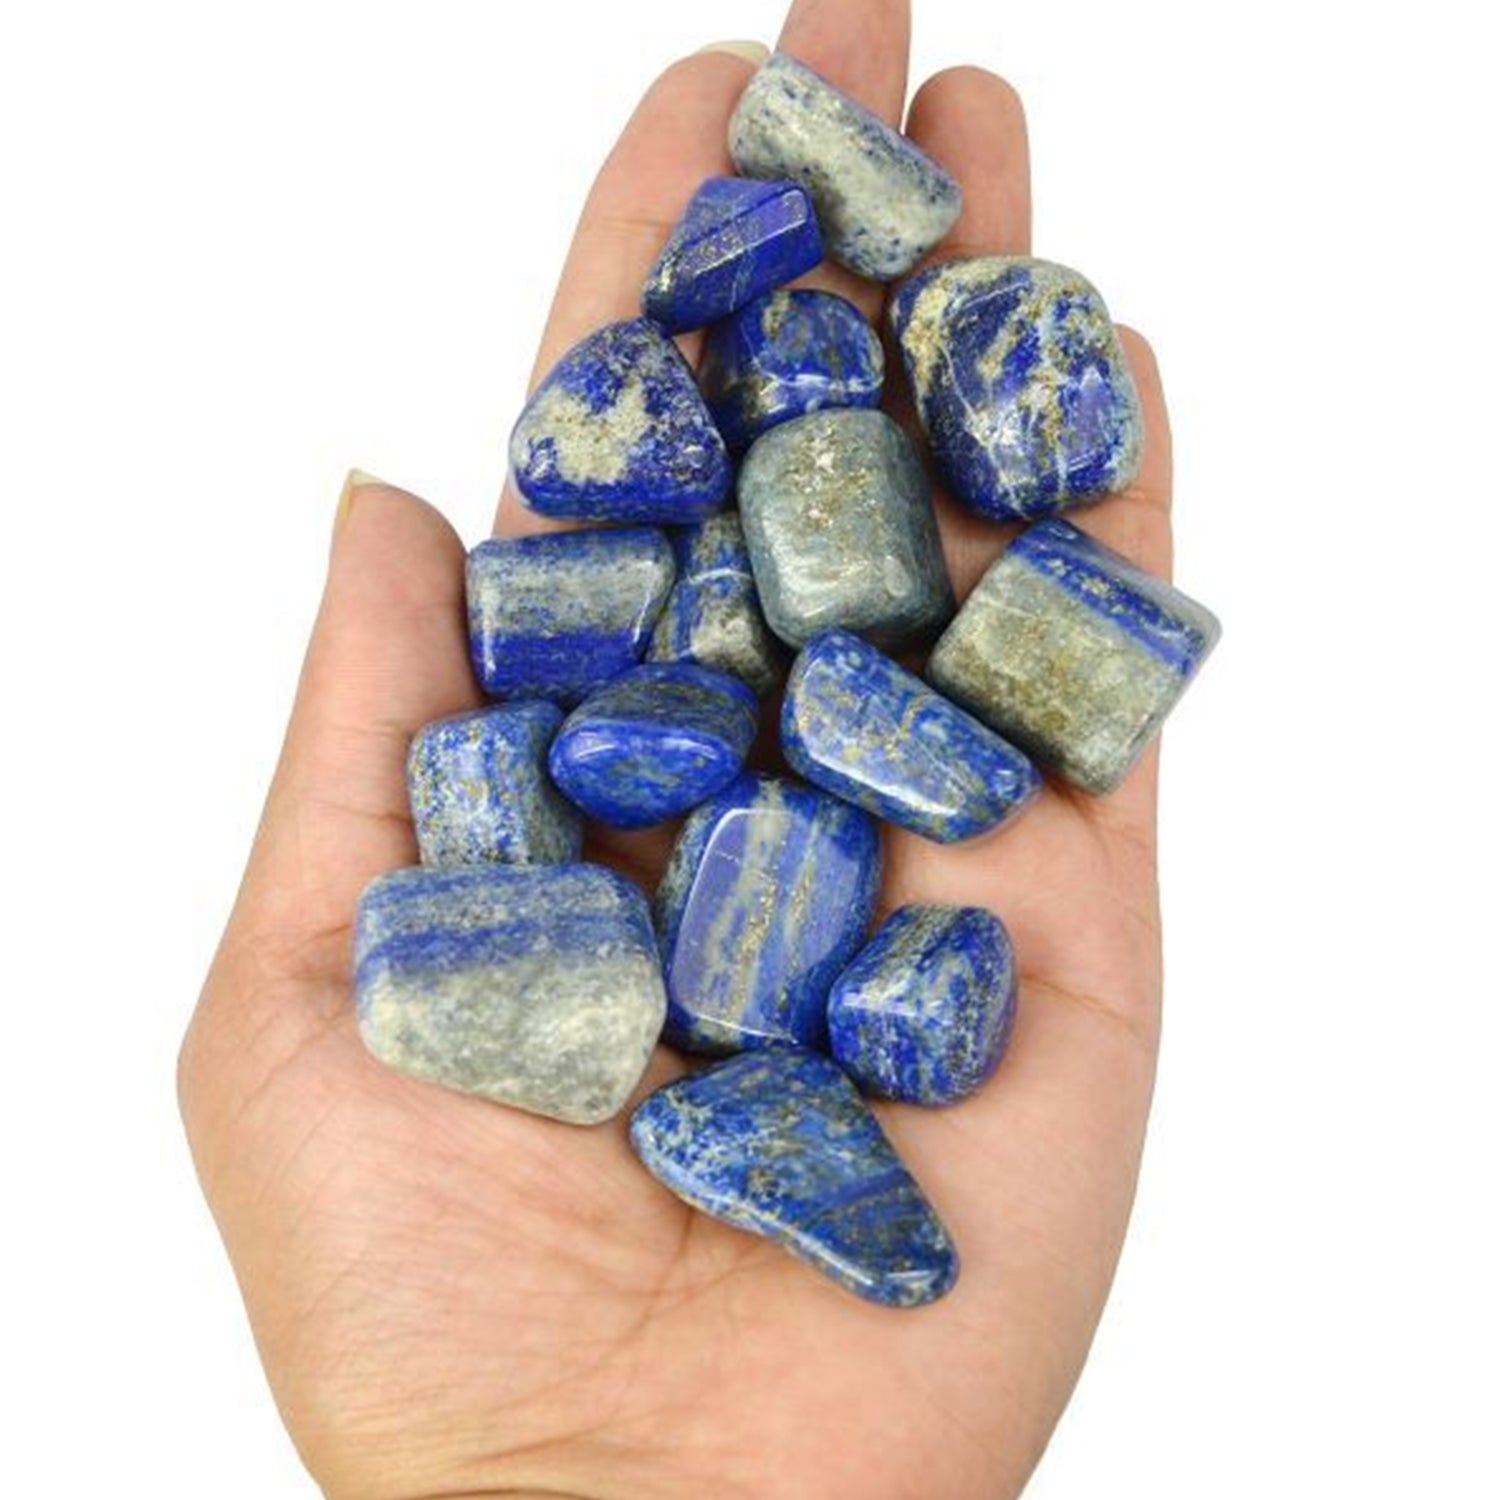 Lapis Lazuli Tumbled Pebble Stones